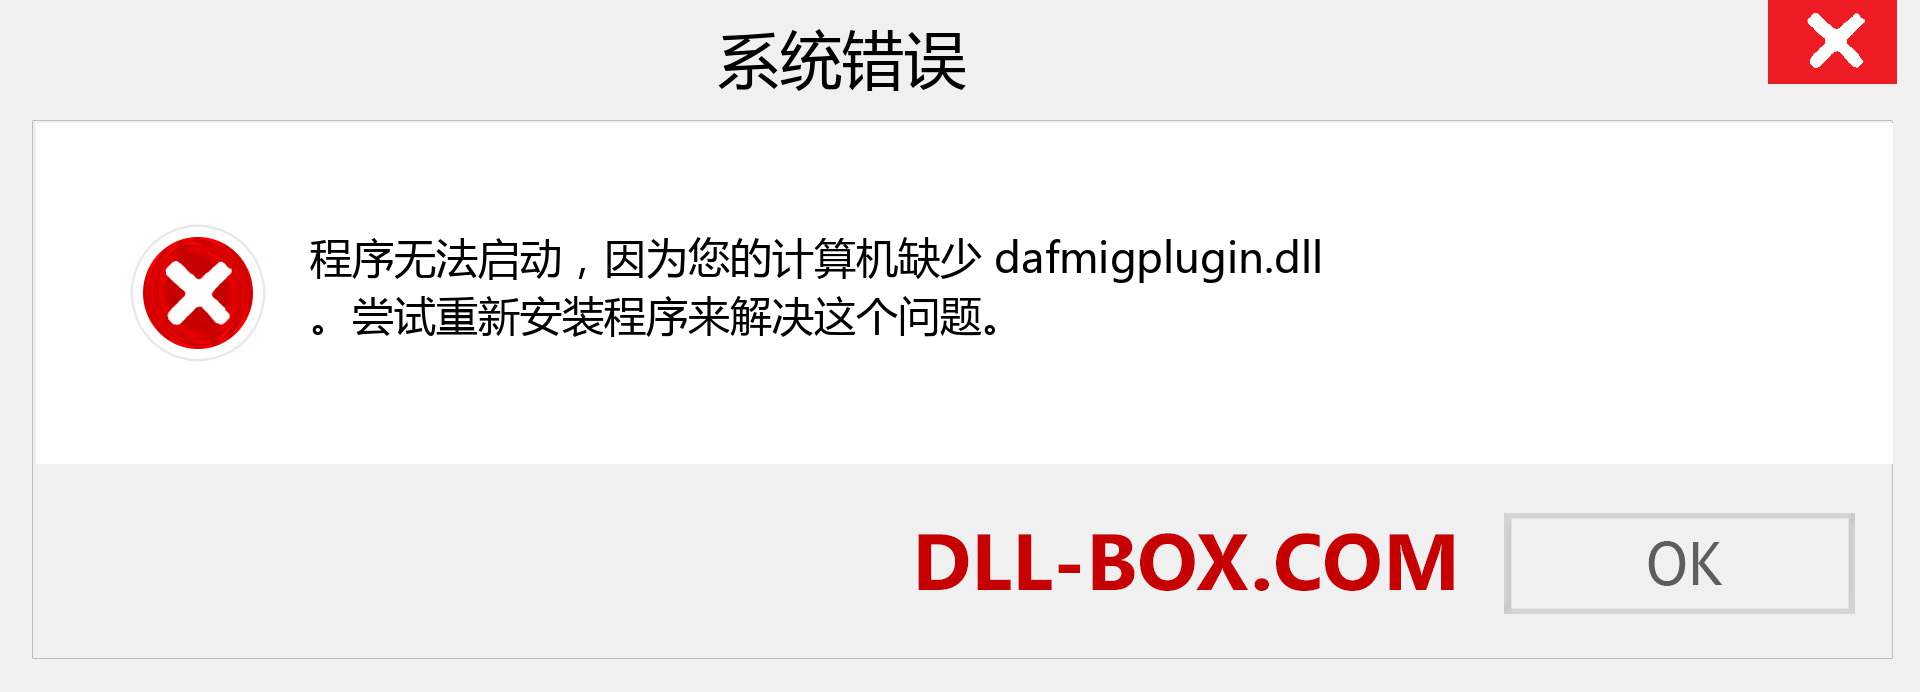 dafmigplugin.dll 文件丢失？。 适用于 Windows 7、8、10 的下载 - 修复 Windows、照片、图像上的 dafmigplugin dll 丢失错误